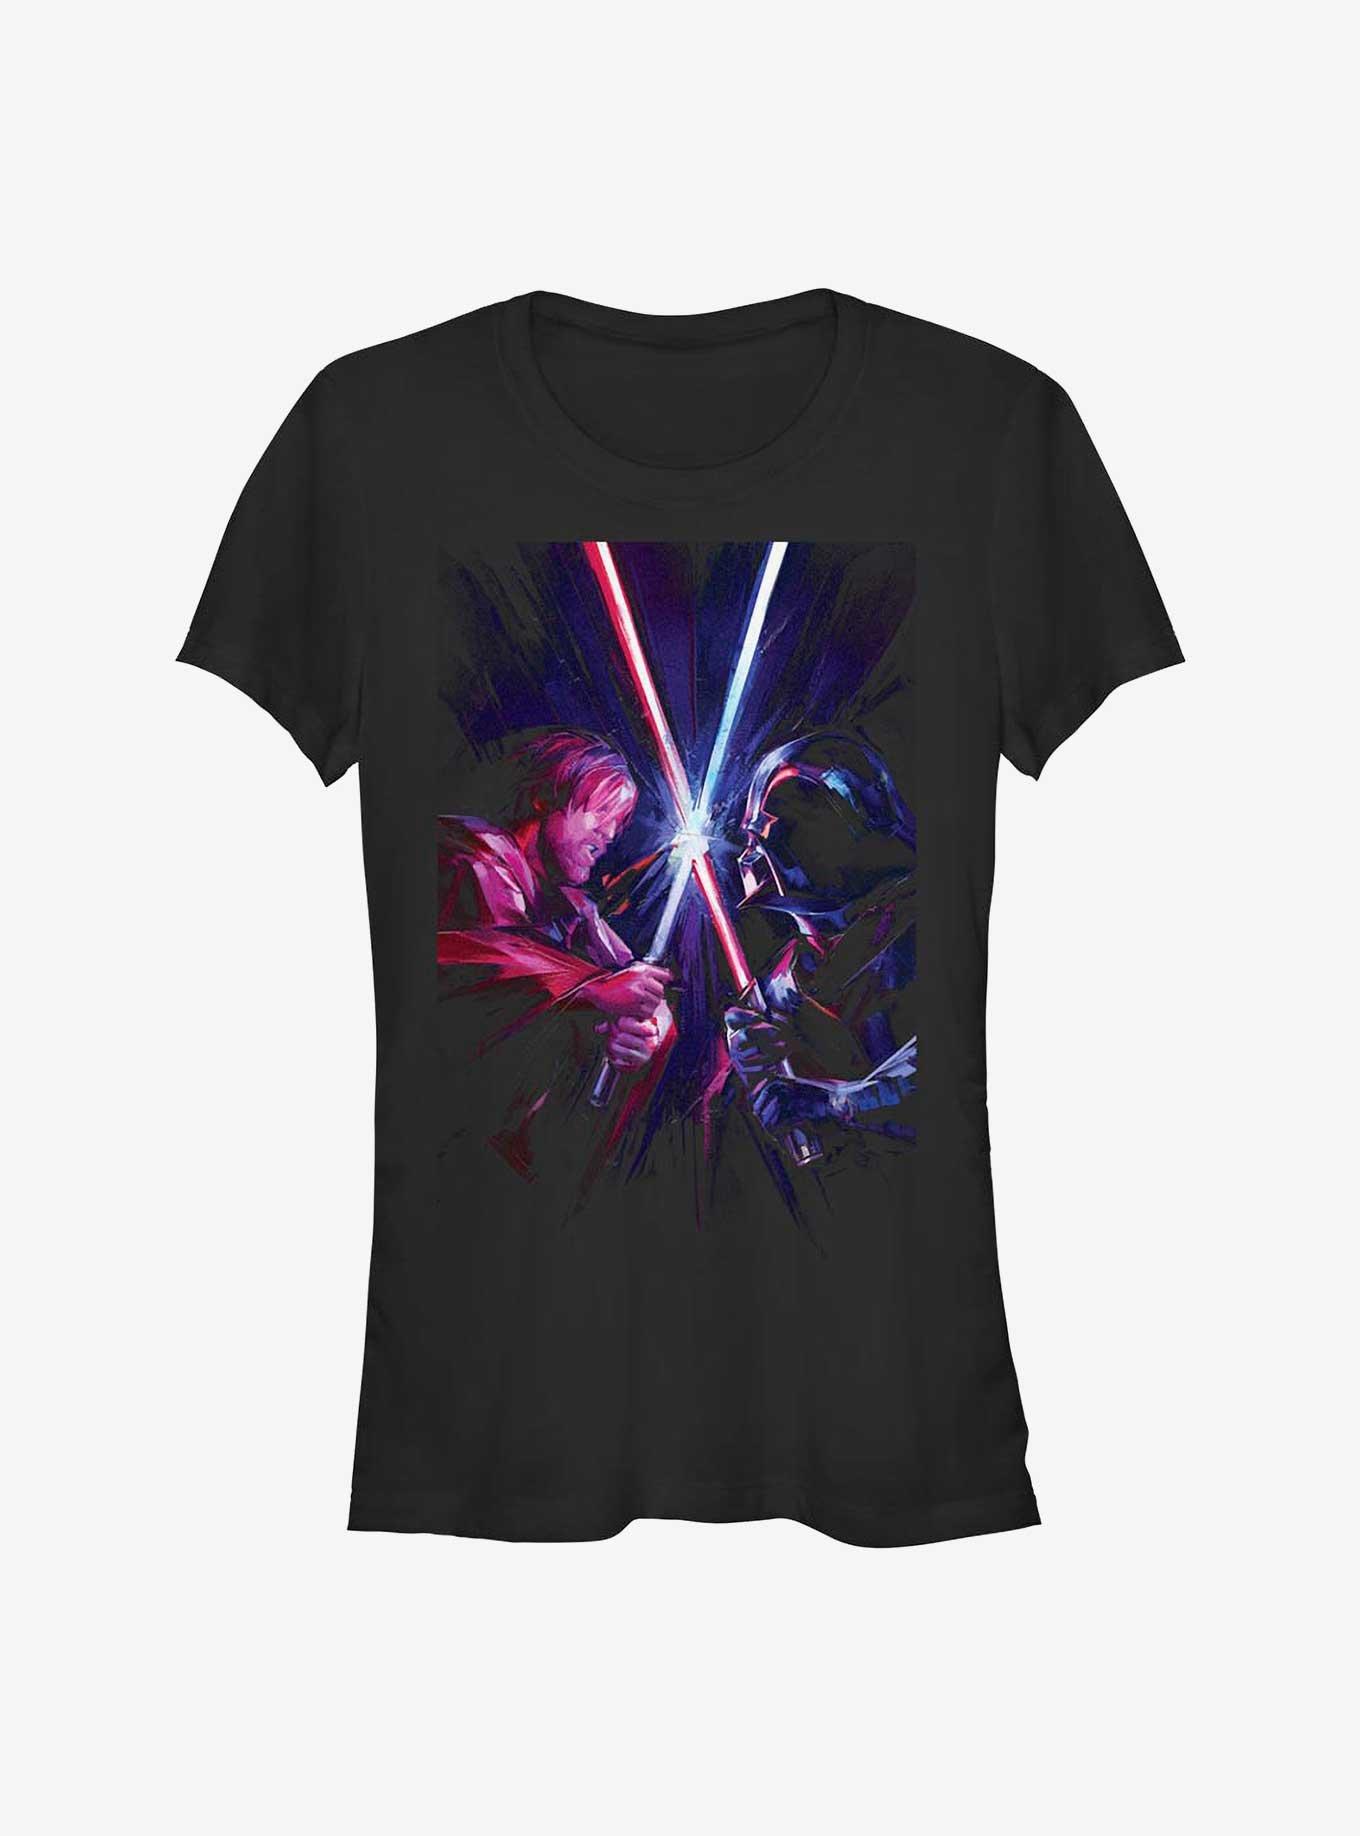 Star Wars Obi-Wan Kenobi Saber Clash Girls T-Shirt